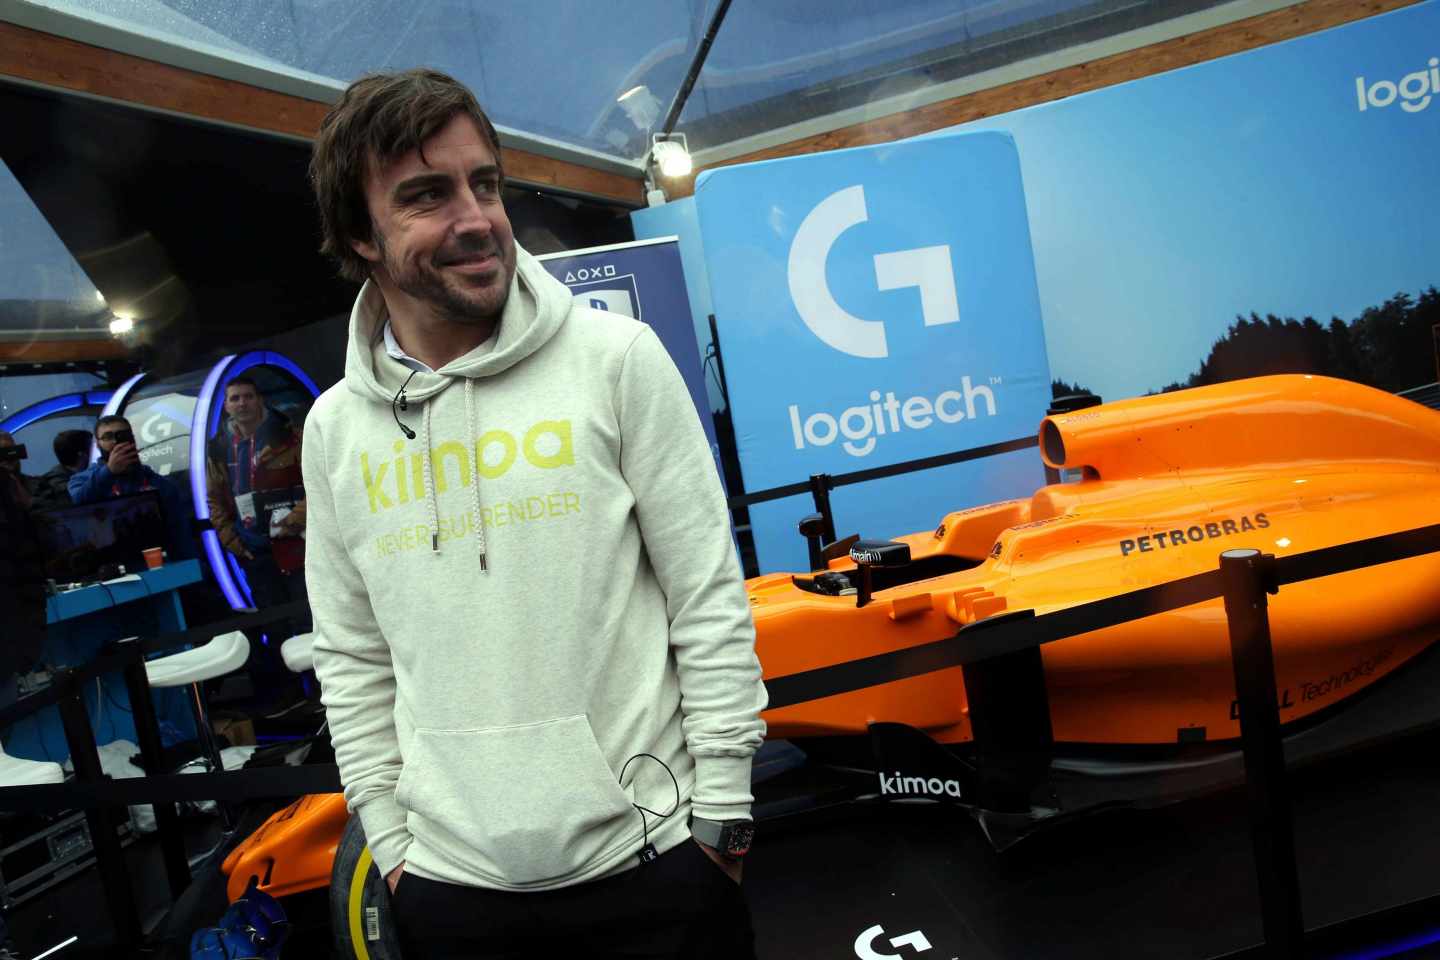 Fernando Alonso, en el Mobile World Congress.